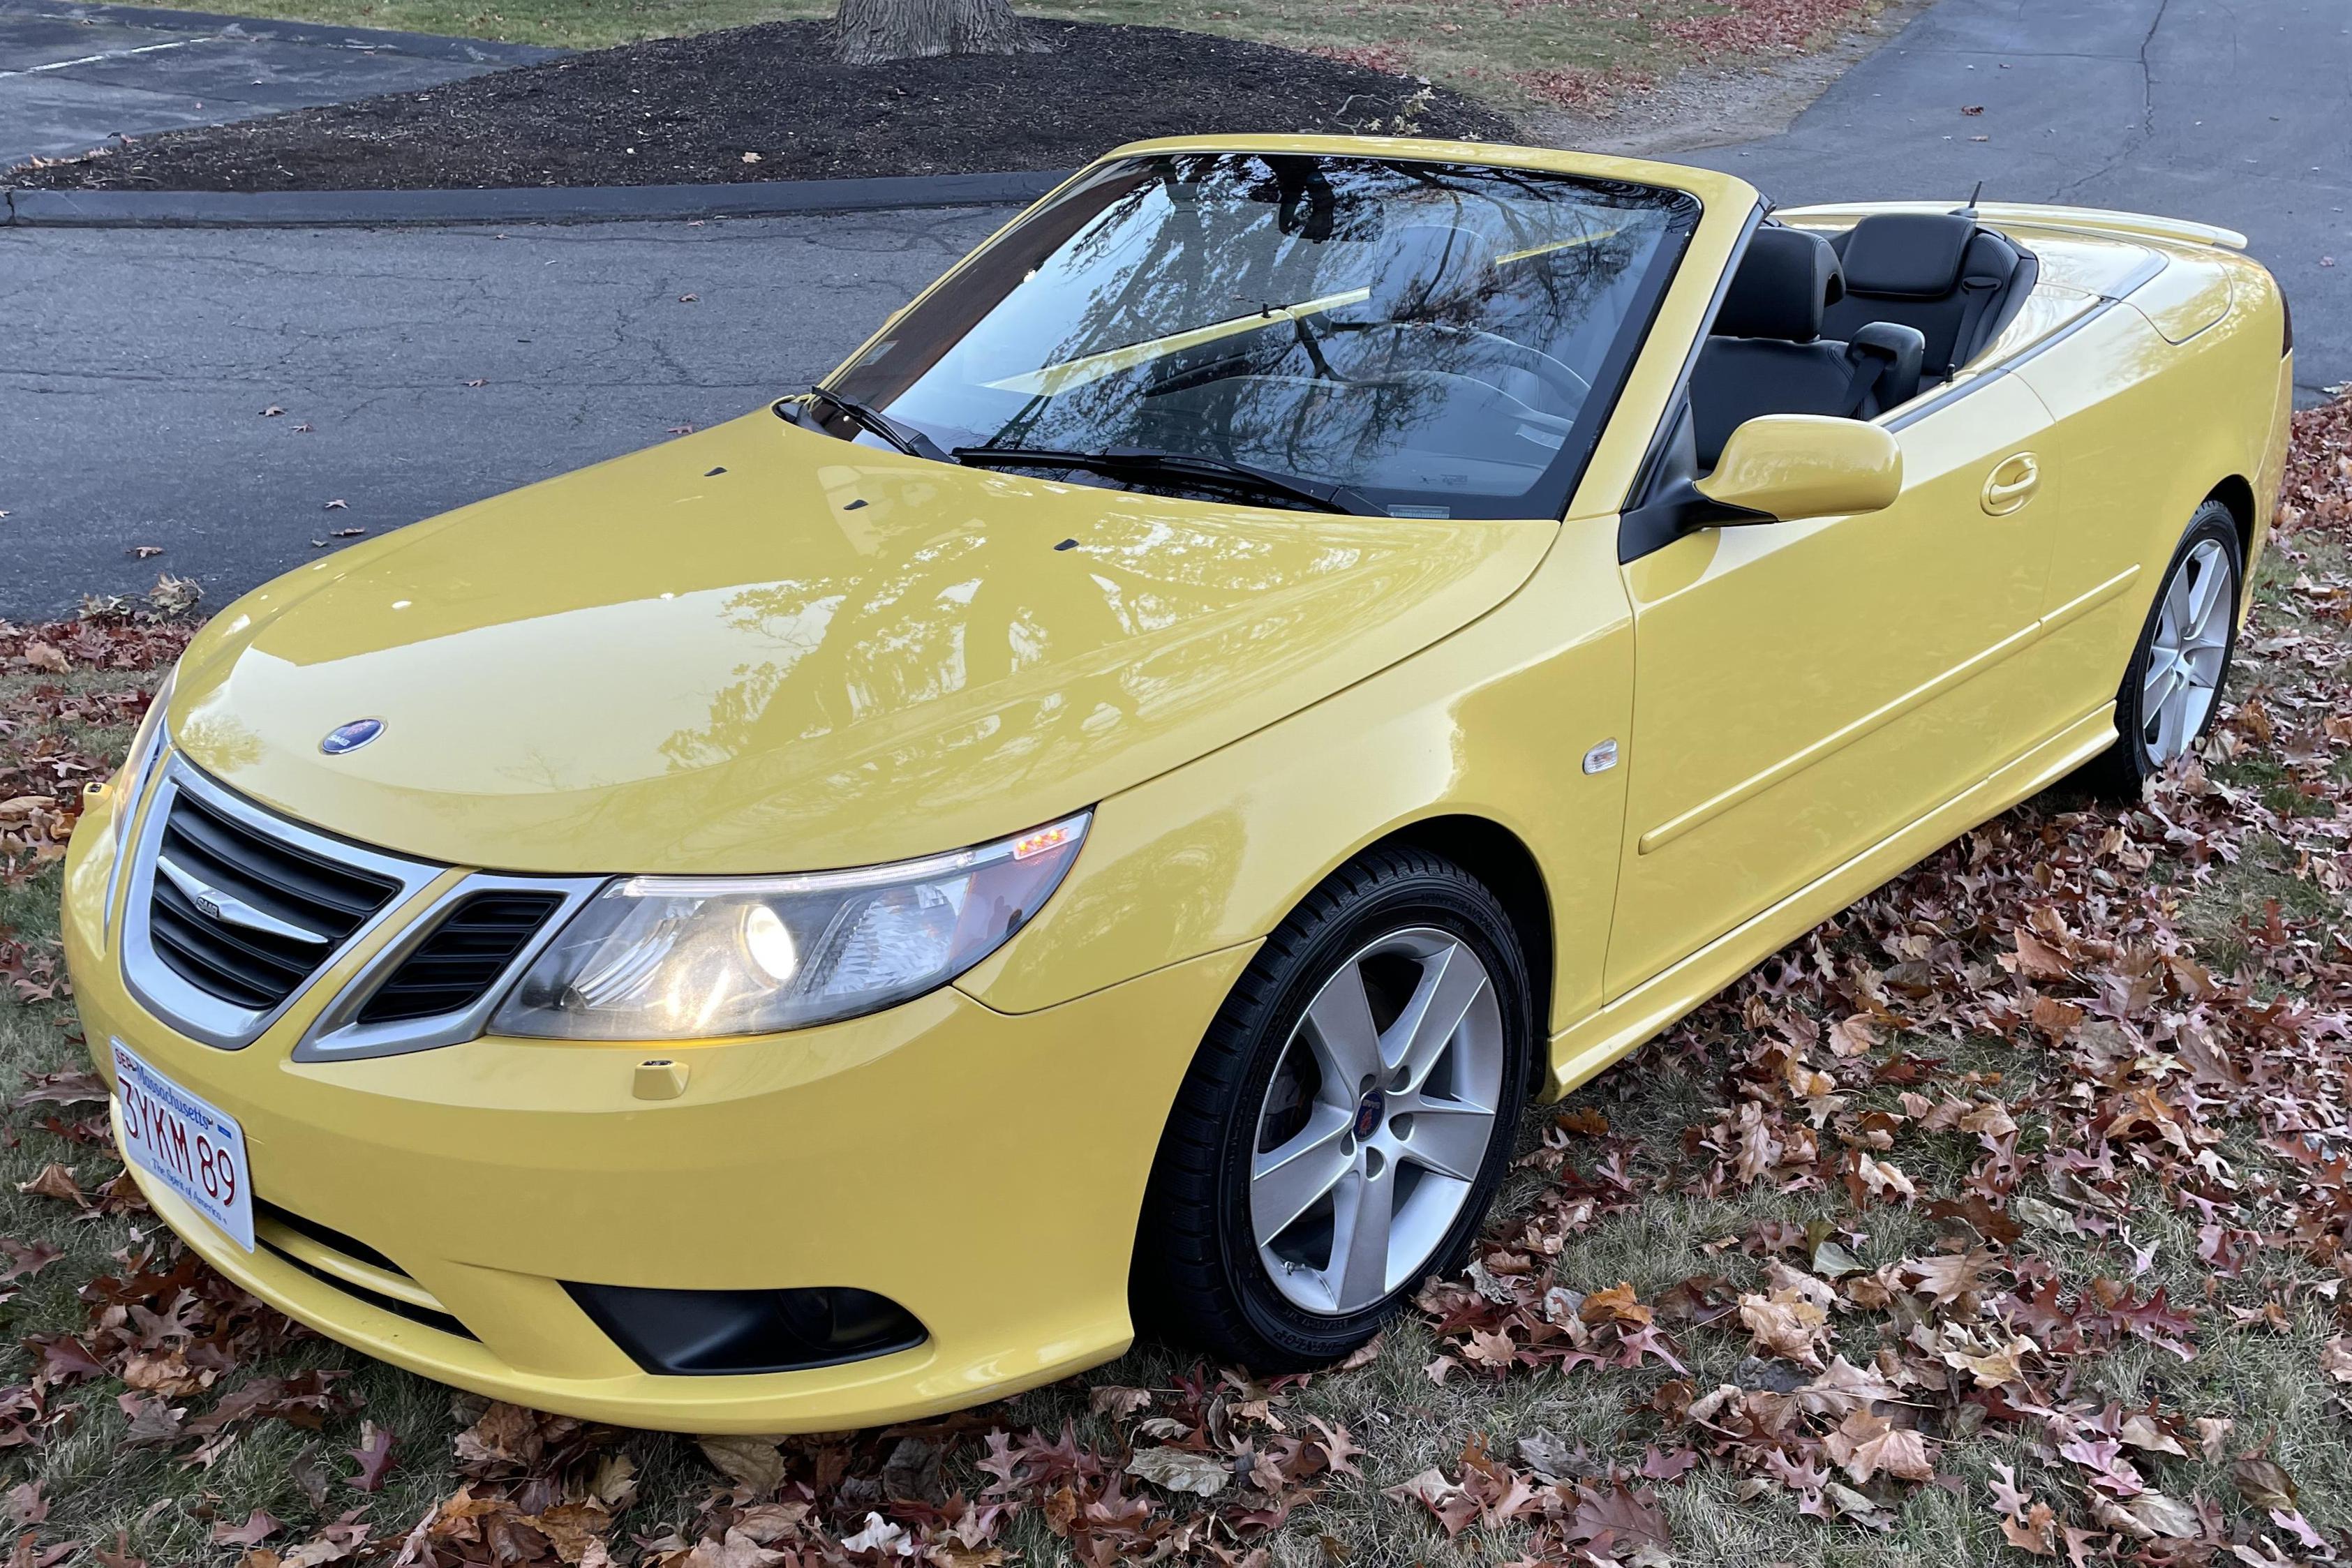 2008 Saab 9-3 Convertible Yellow Edition for Sale - Cars u0026 Bids